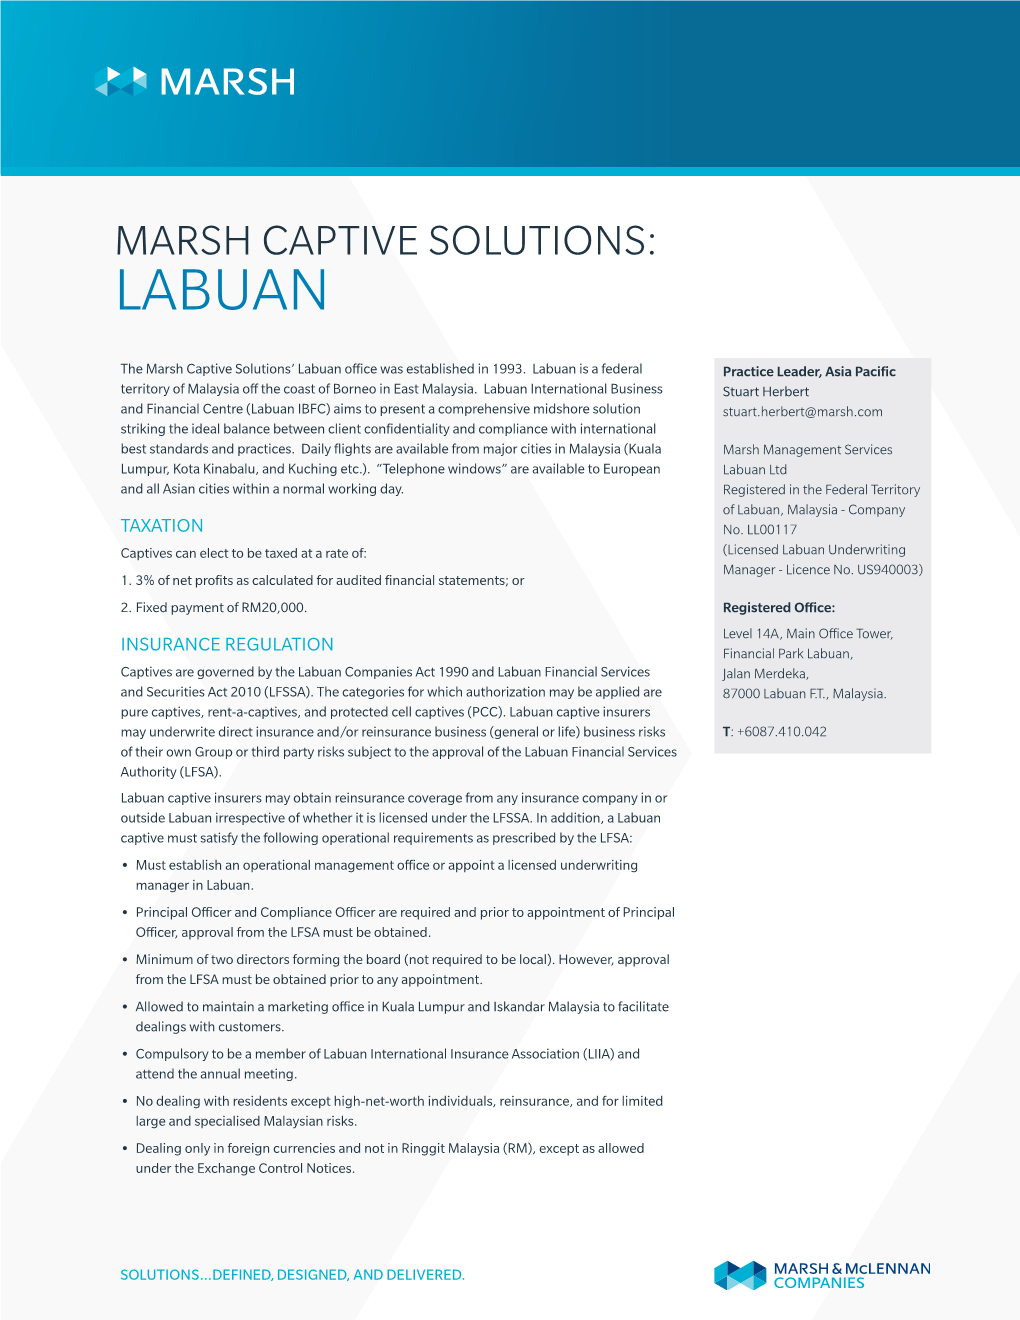 Marsh Captive Solutions: Labuan